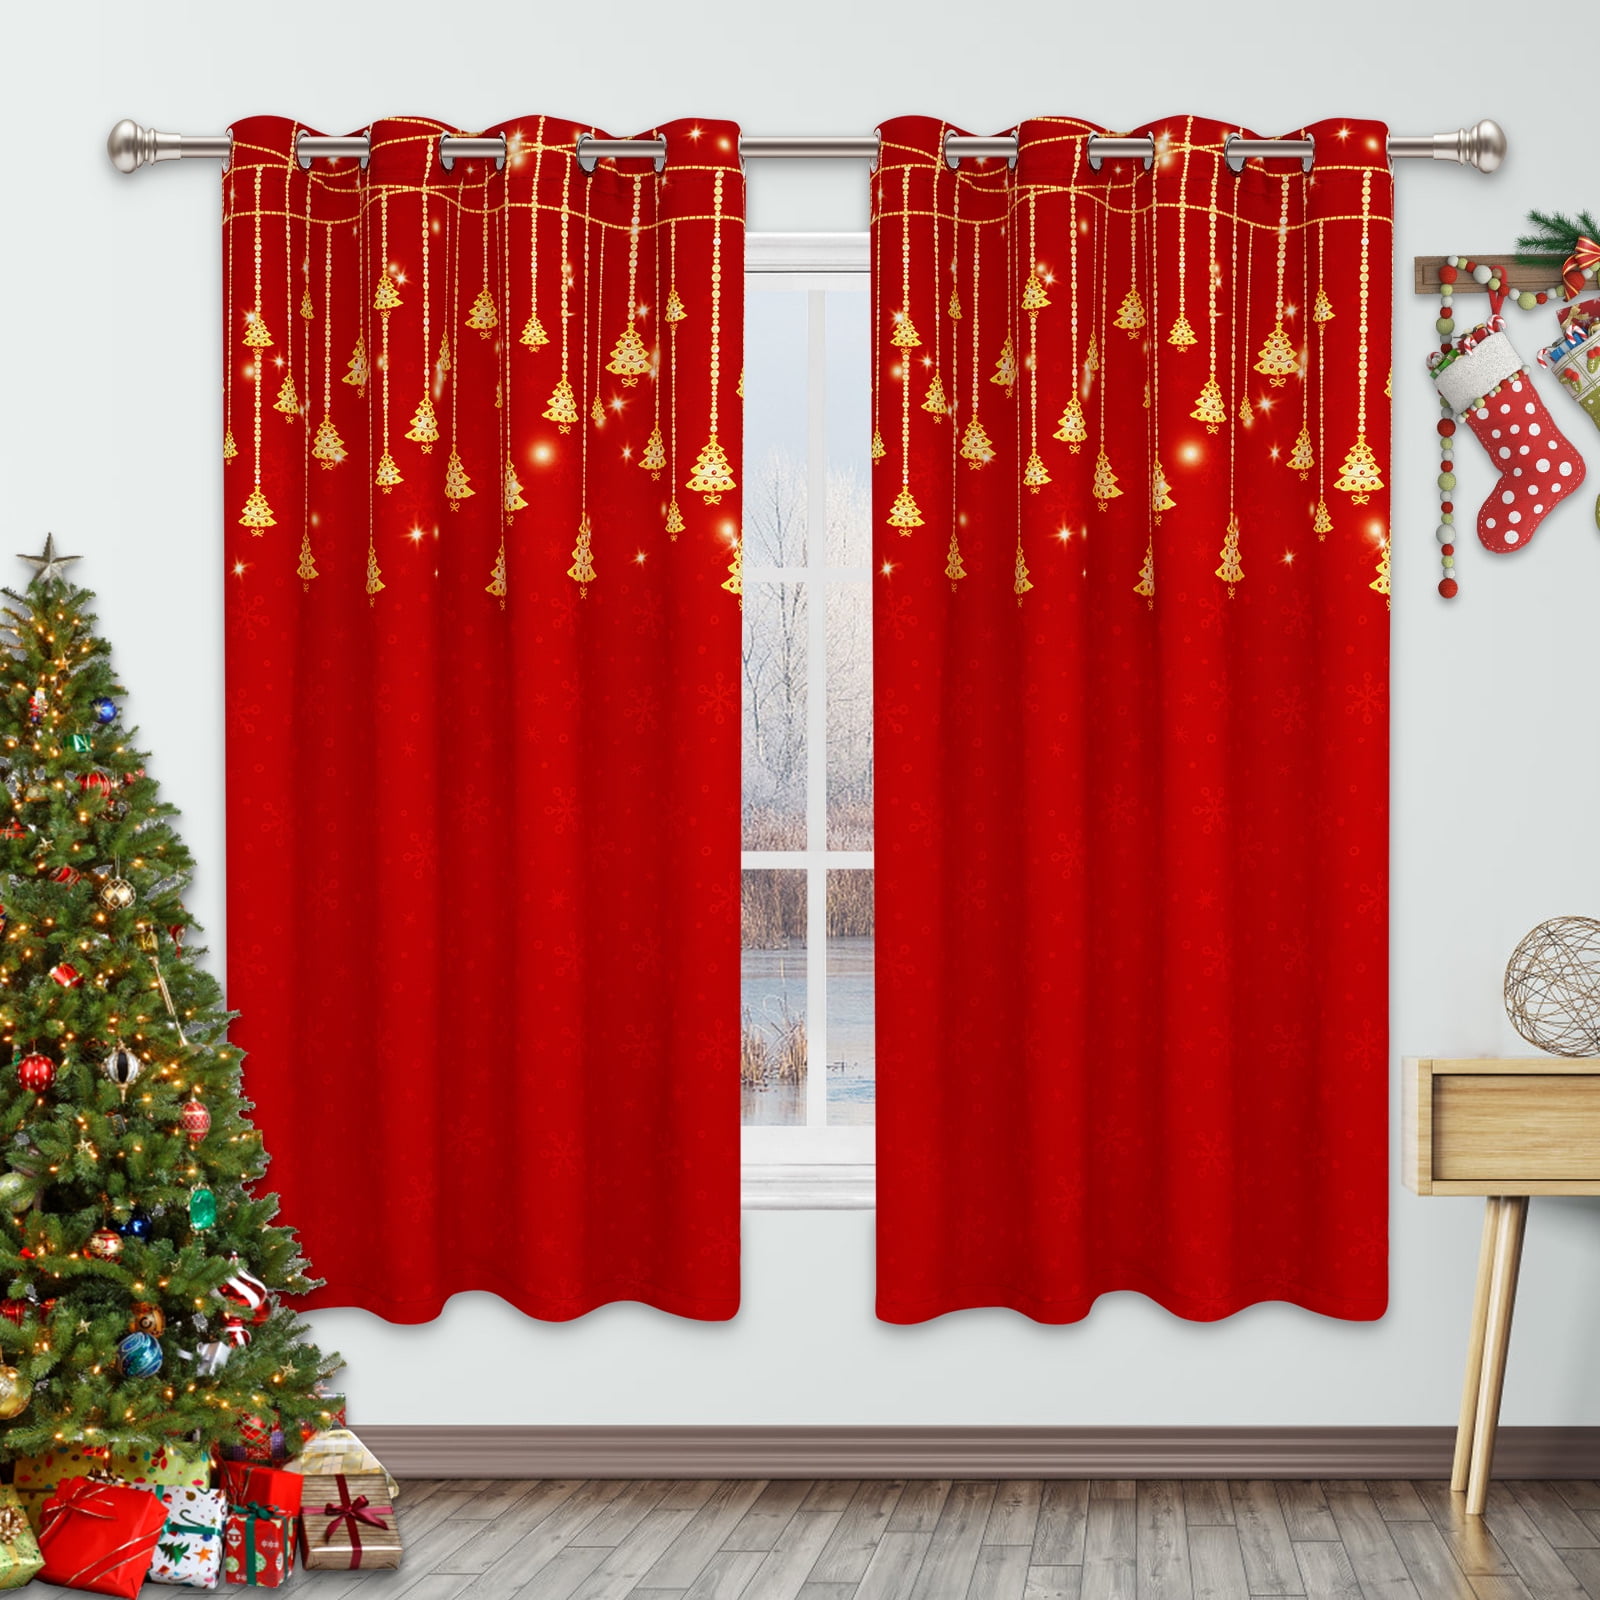 Alishomtll Christmas Curtains for Living Room Blackout Star Christmas ...